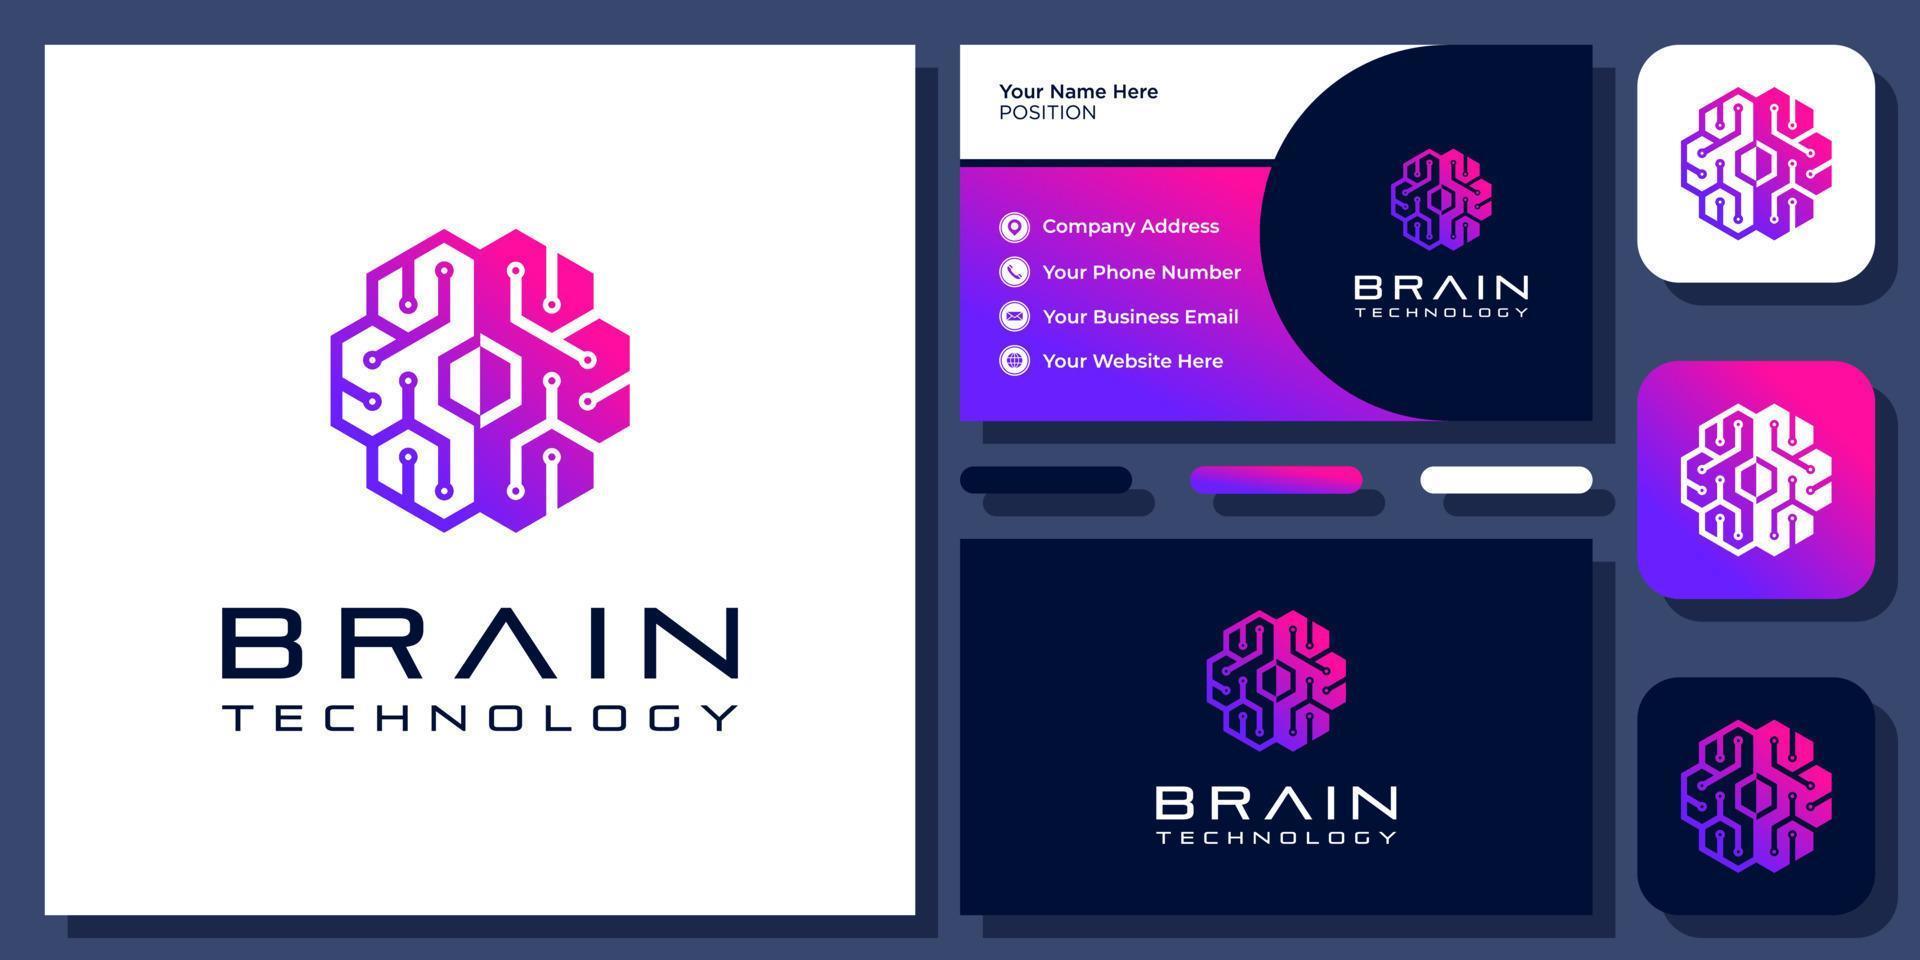 Brain Circuit Board Technology Digital Science Human Innovation Vector Logo Design with Business Card